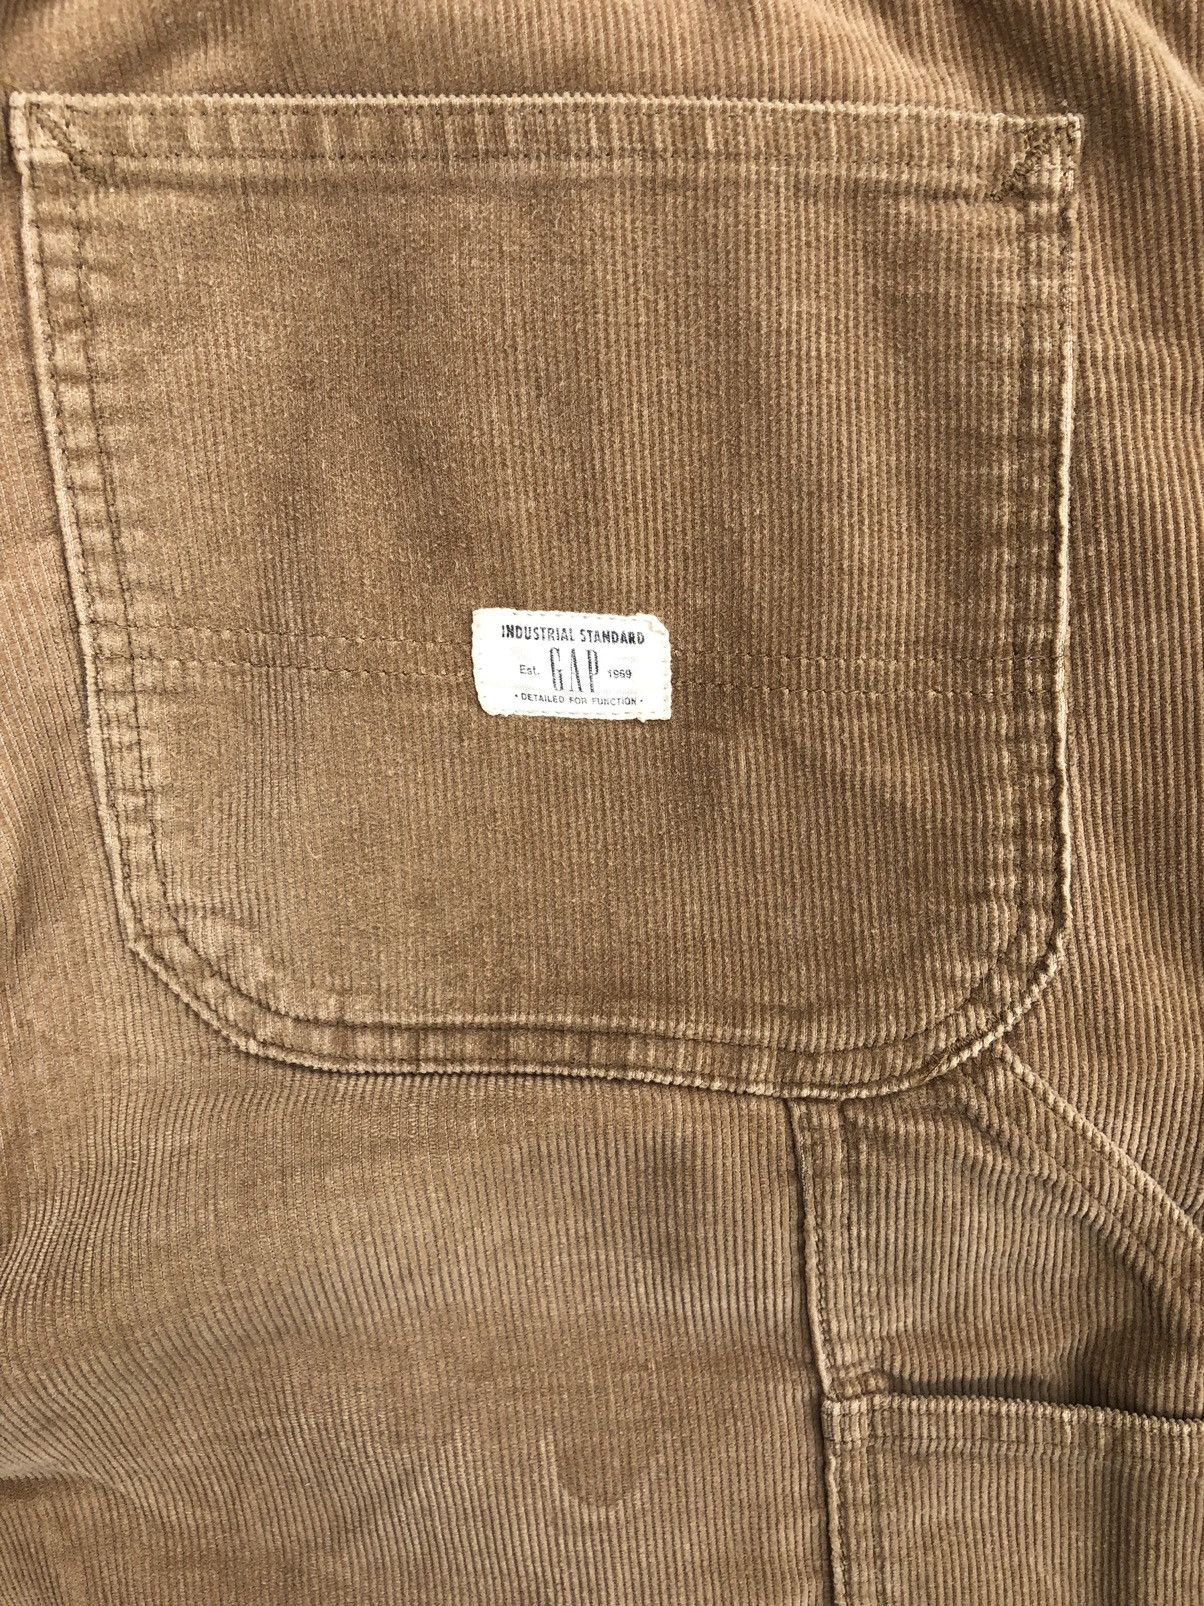 Vintage Gap Corduroy carpenter pants Size US 36 / EU 52 - 3 Thumbnail